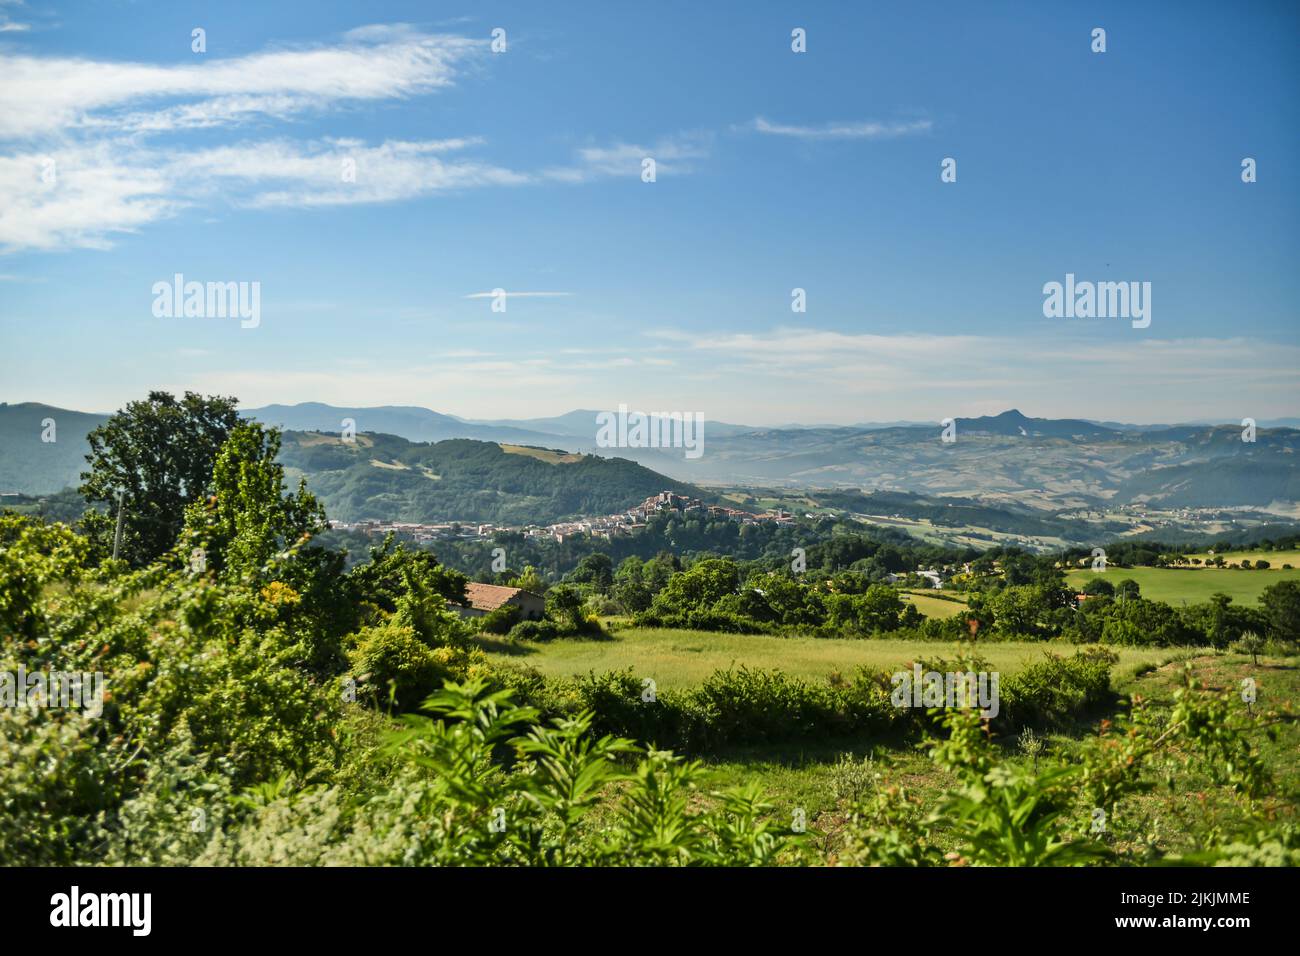 A characteristic landscape of the Basilicata region, Italy Stock Photo